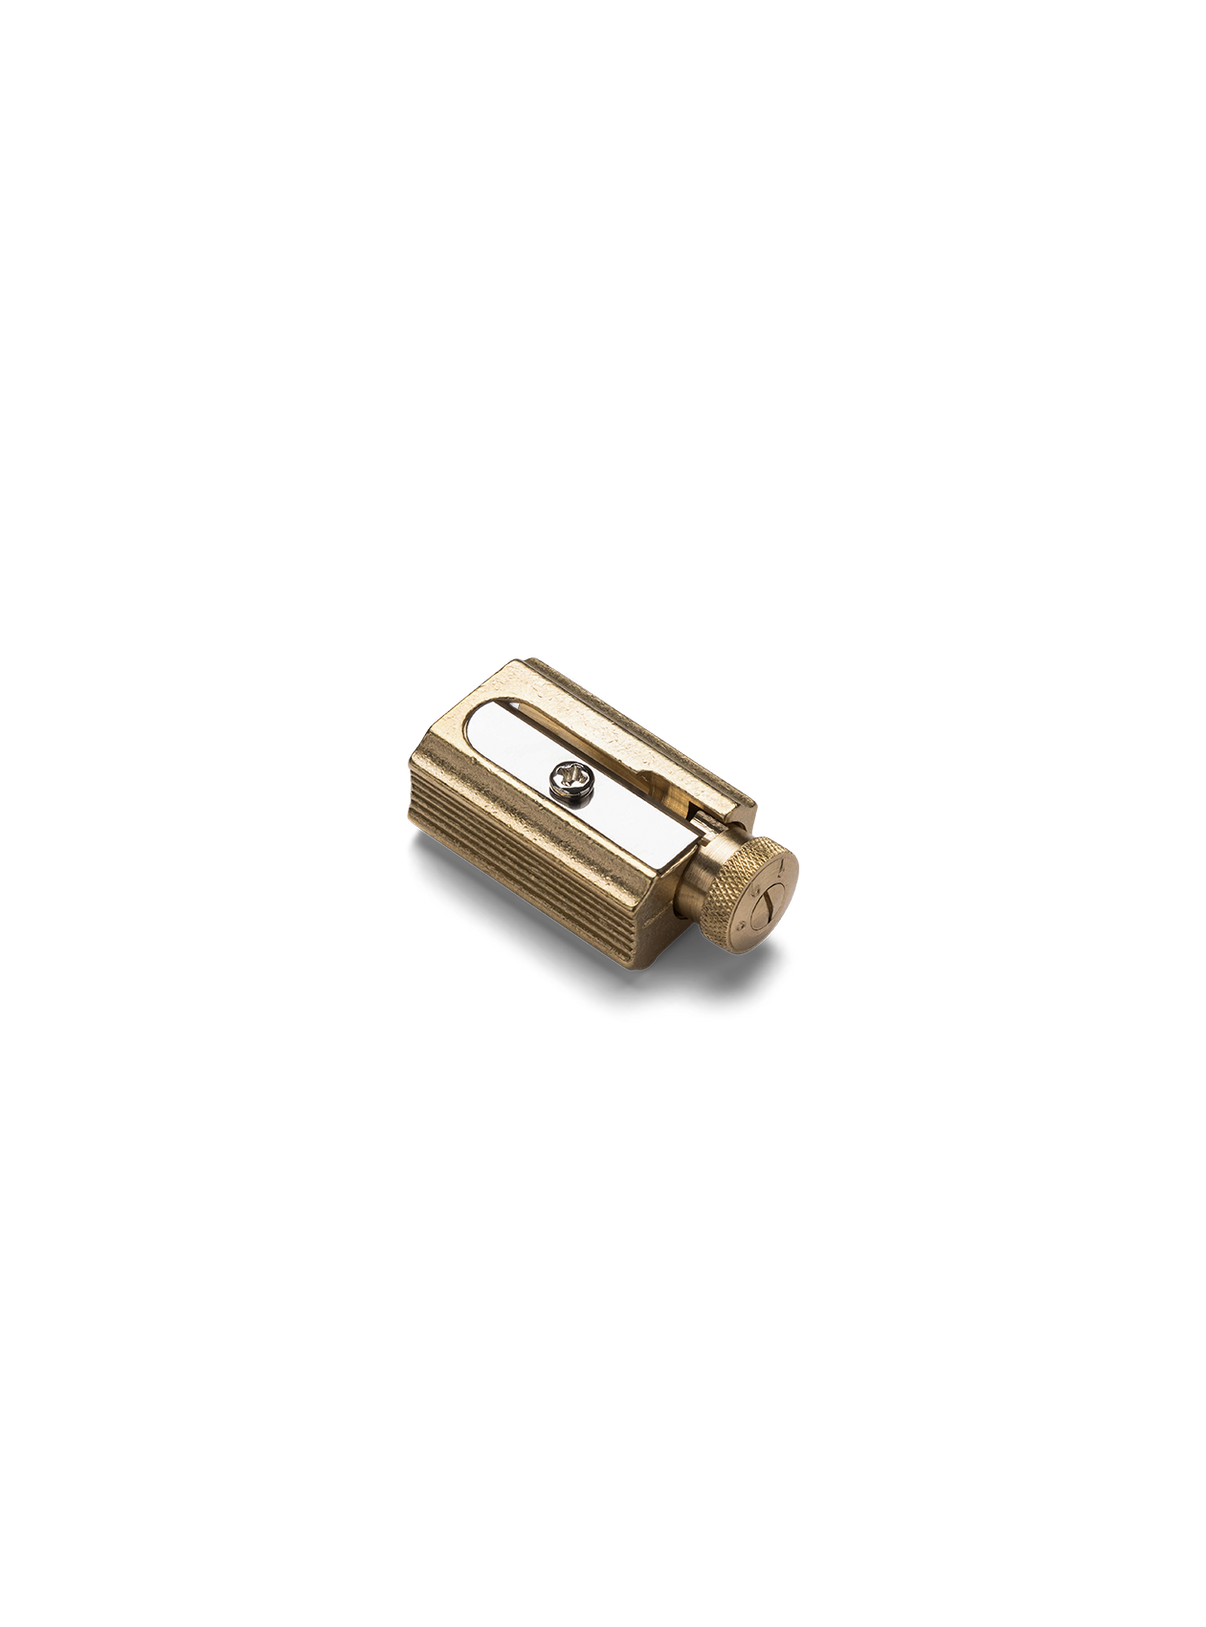 DUX Brass Pencil Sharpener | Adjustable with Case